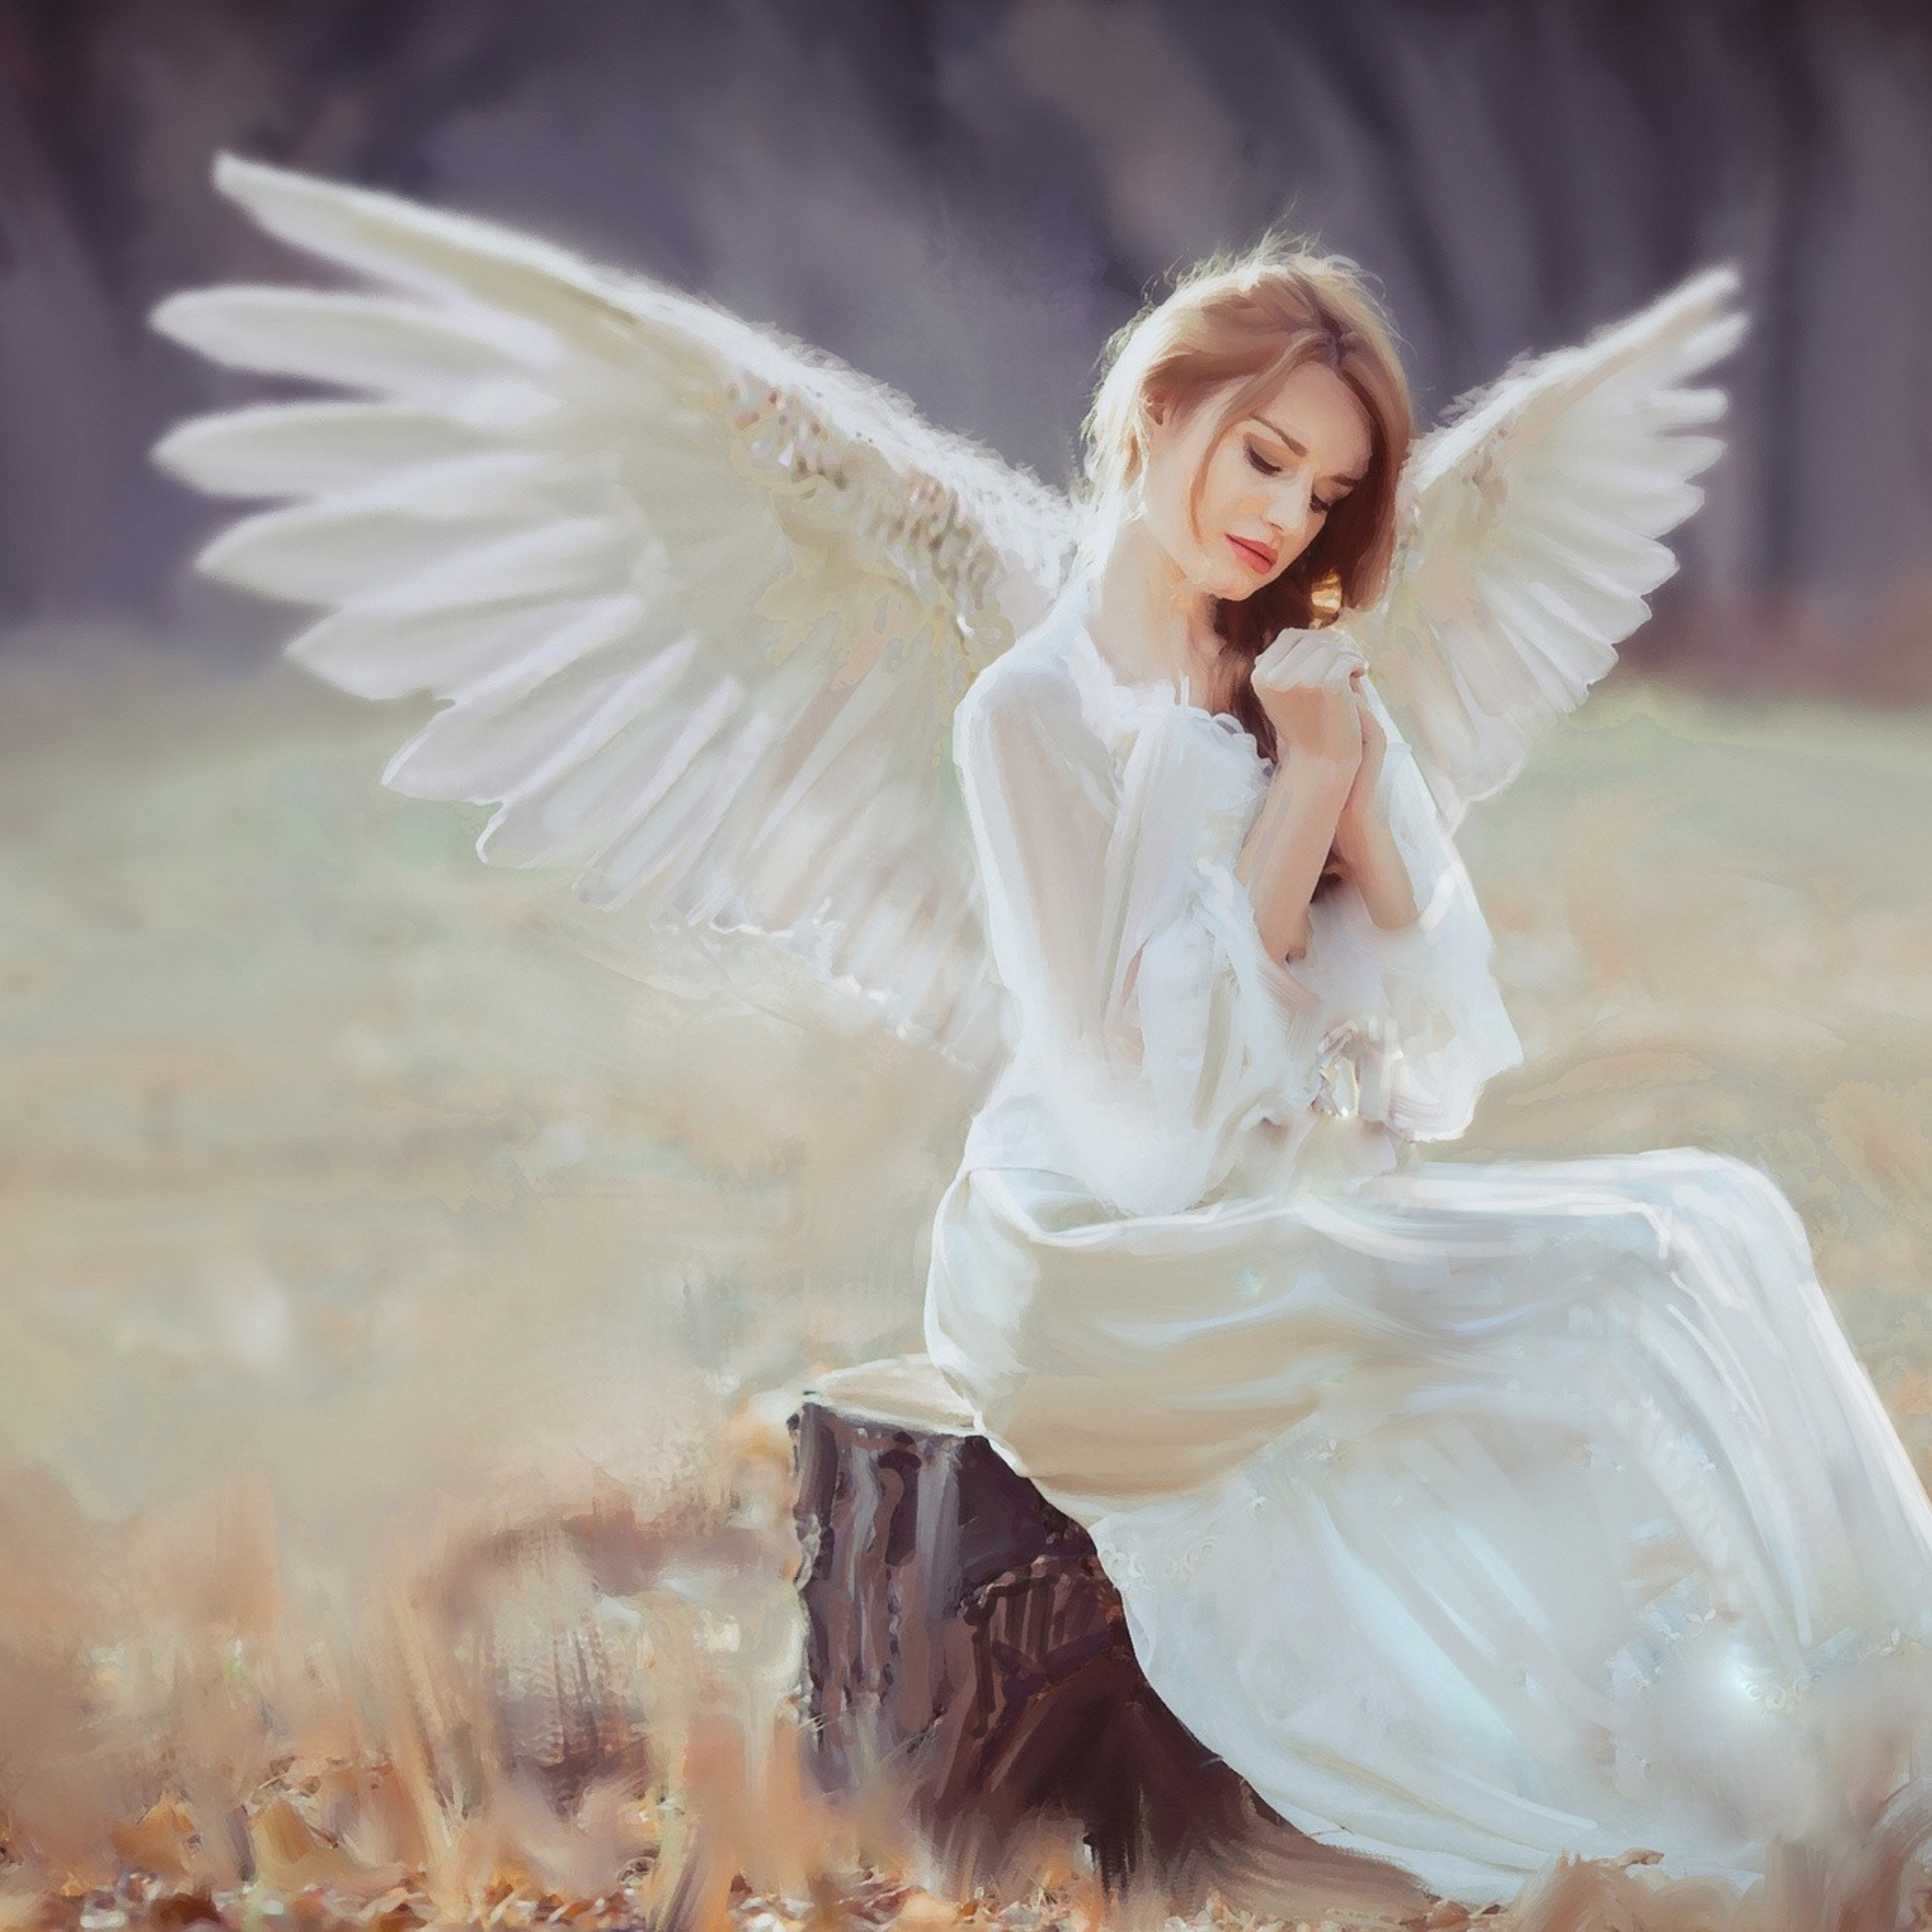 Teen girls angels models. Angels Lullaby Хелена. Девушка с крыльями. Девушка - ангел. Дева-ангел.